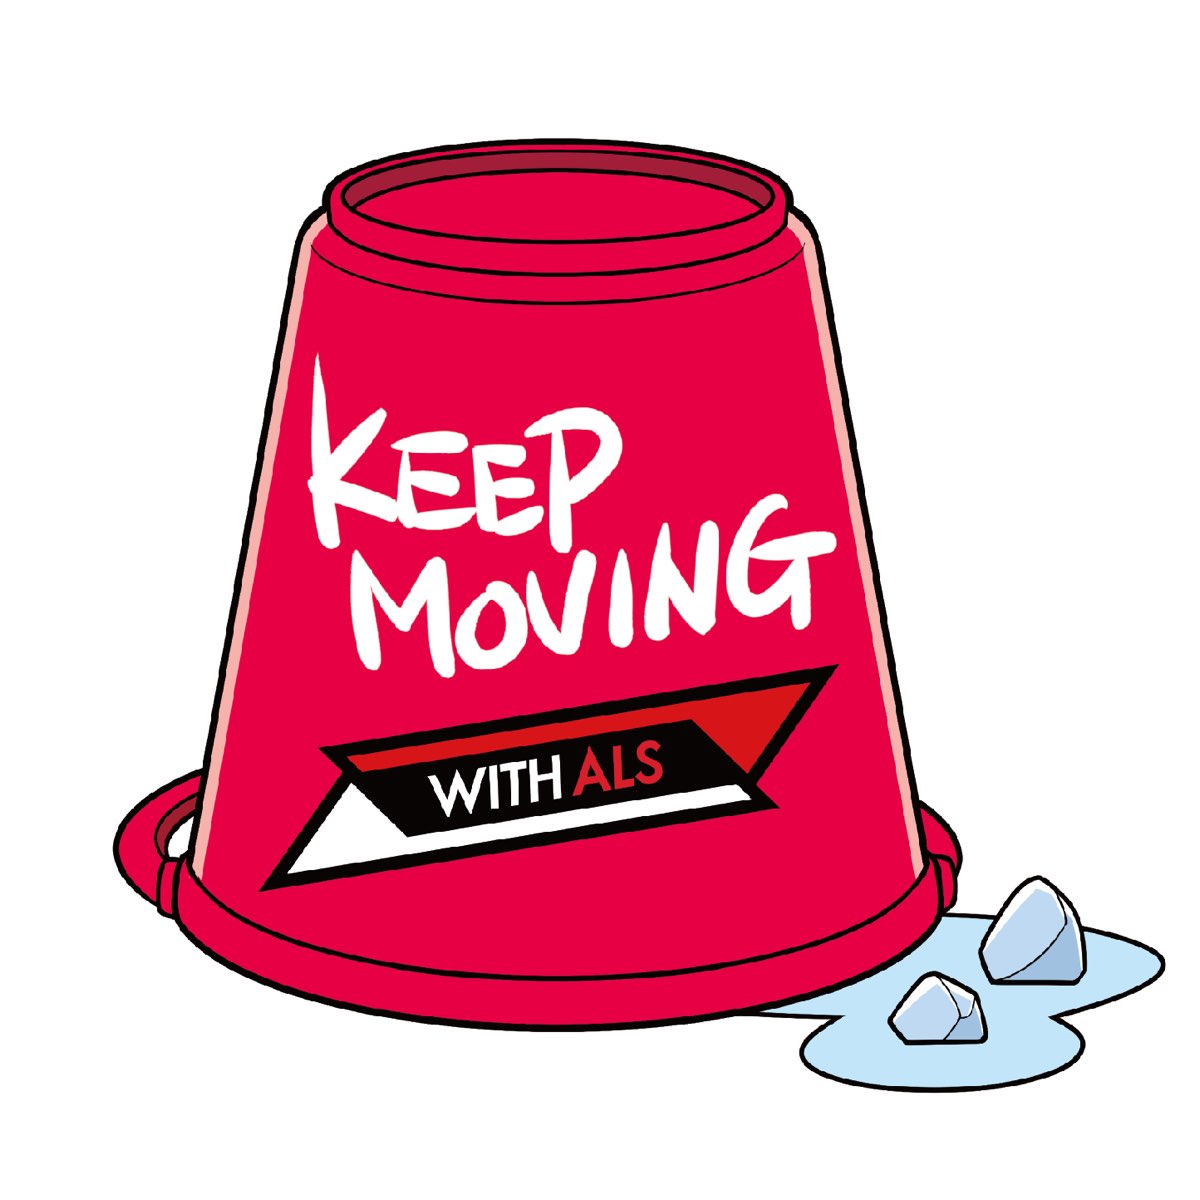 Keep moving. Yay Baby. Keep on moving kastuvas feat. Emie.